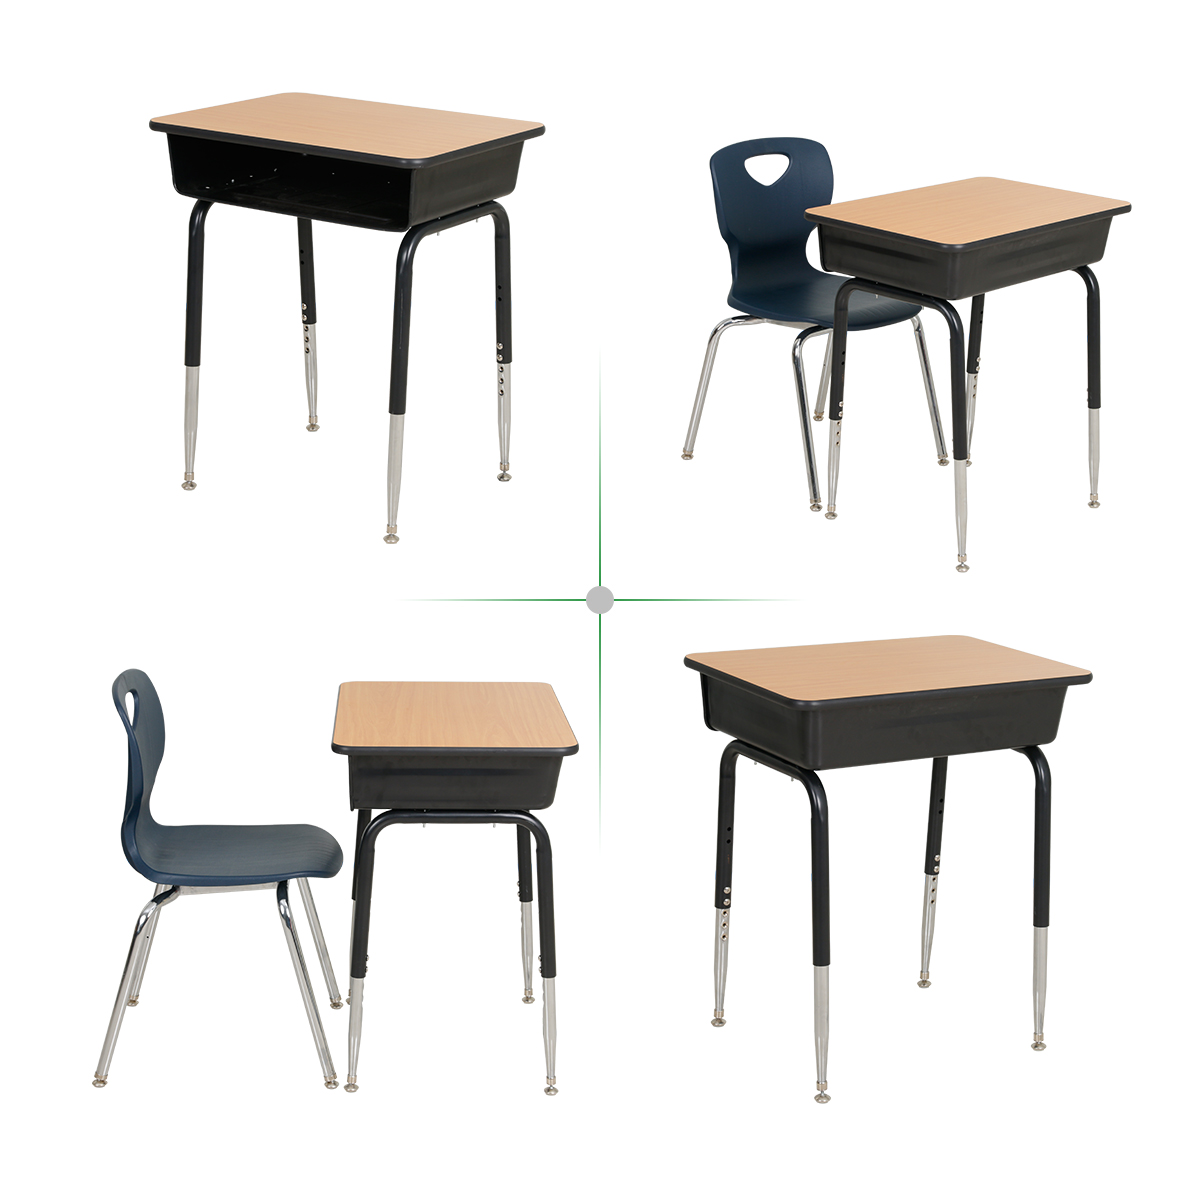 Single Study Table and Chair 1.jpg